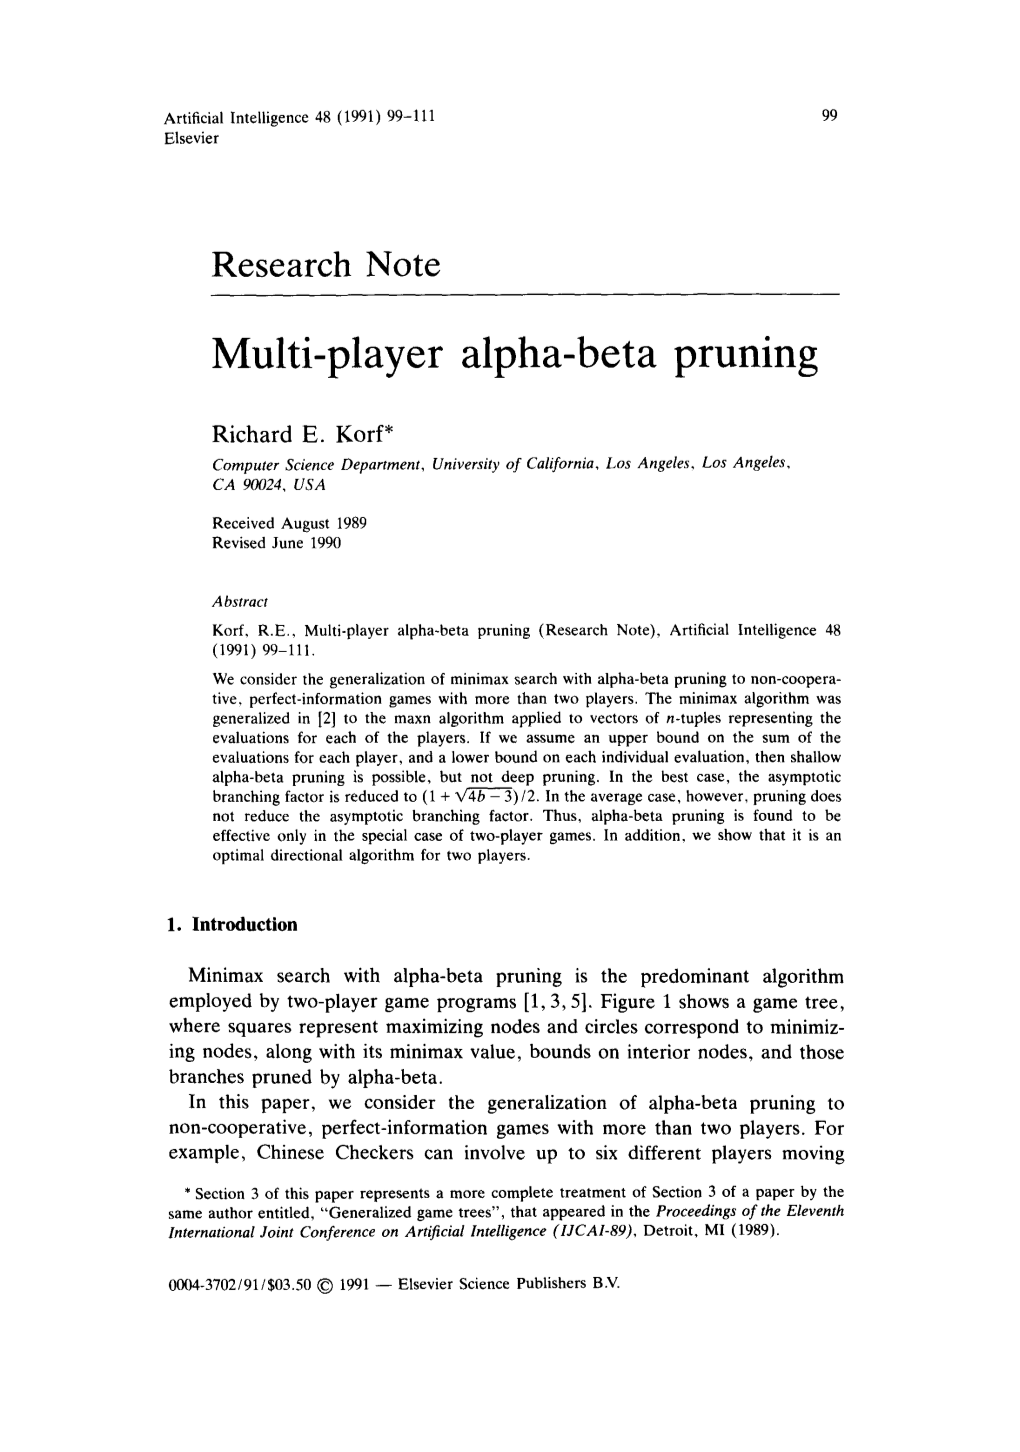 Multi-Player Alpha-Beta Pruning